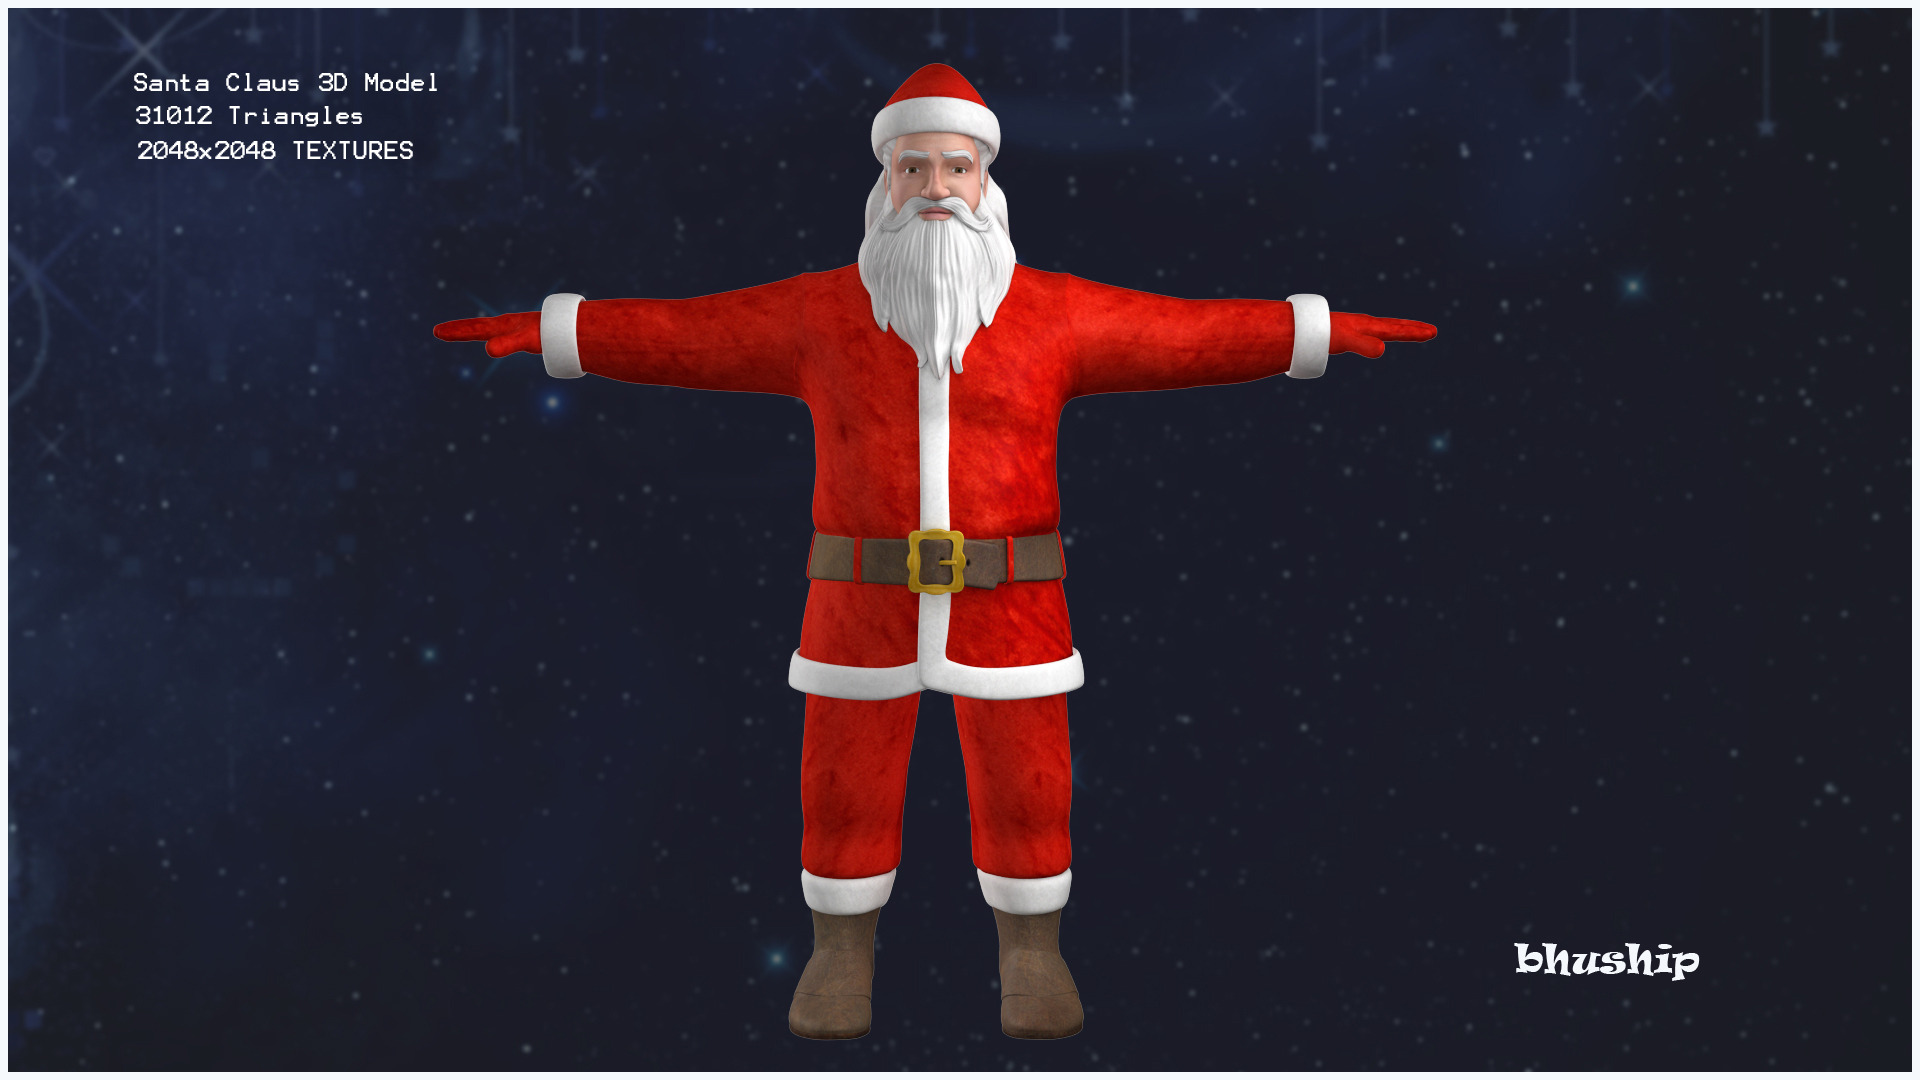 Santa Claus 3D Model by bhuship | 3DOcean